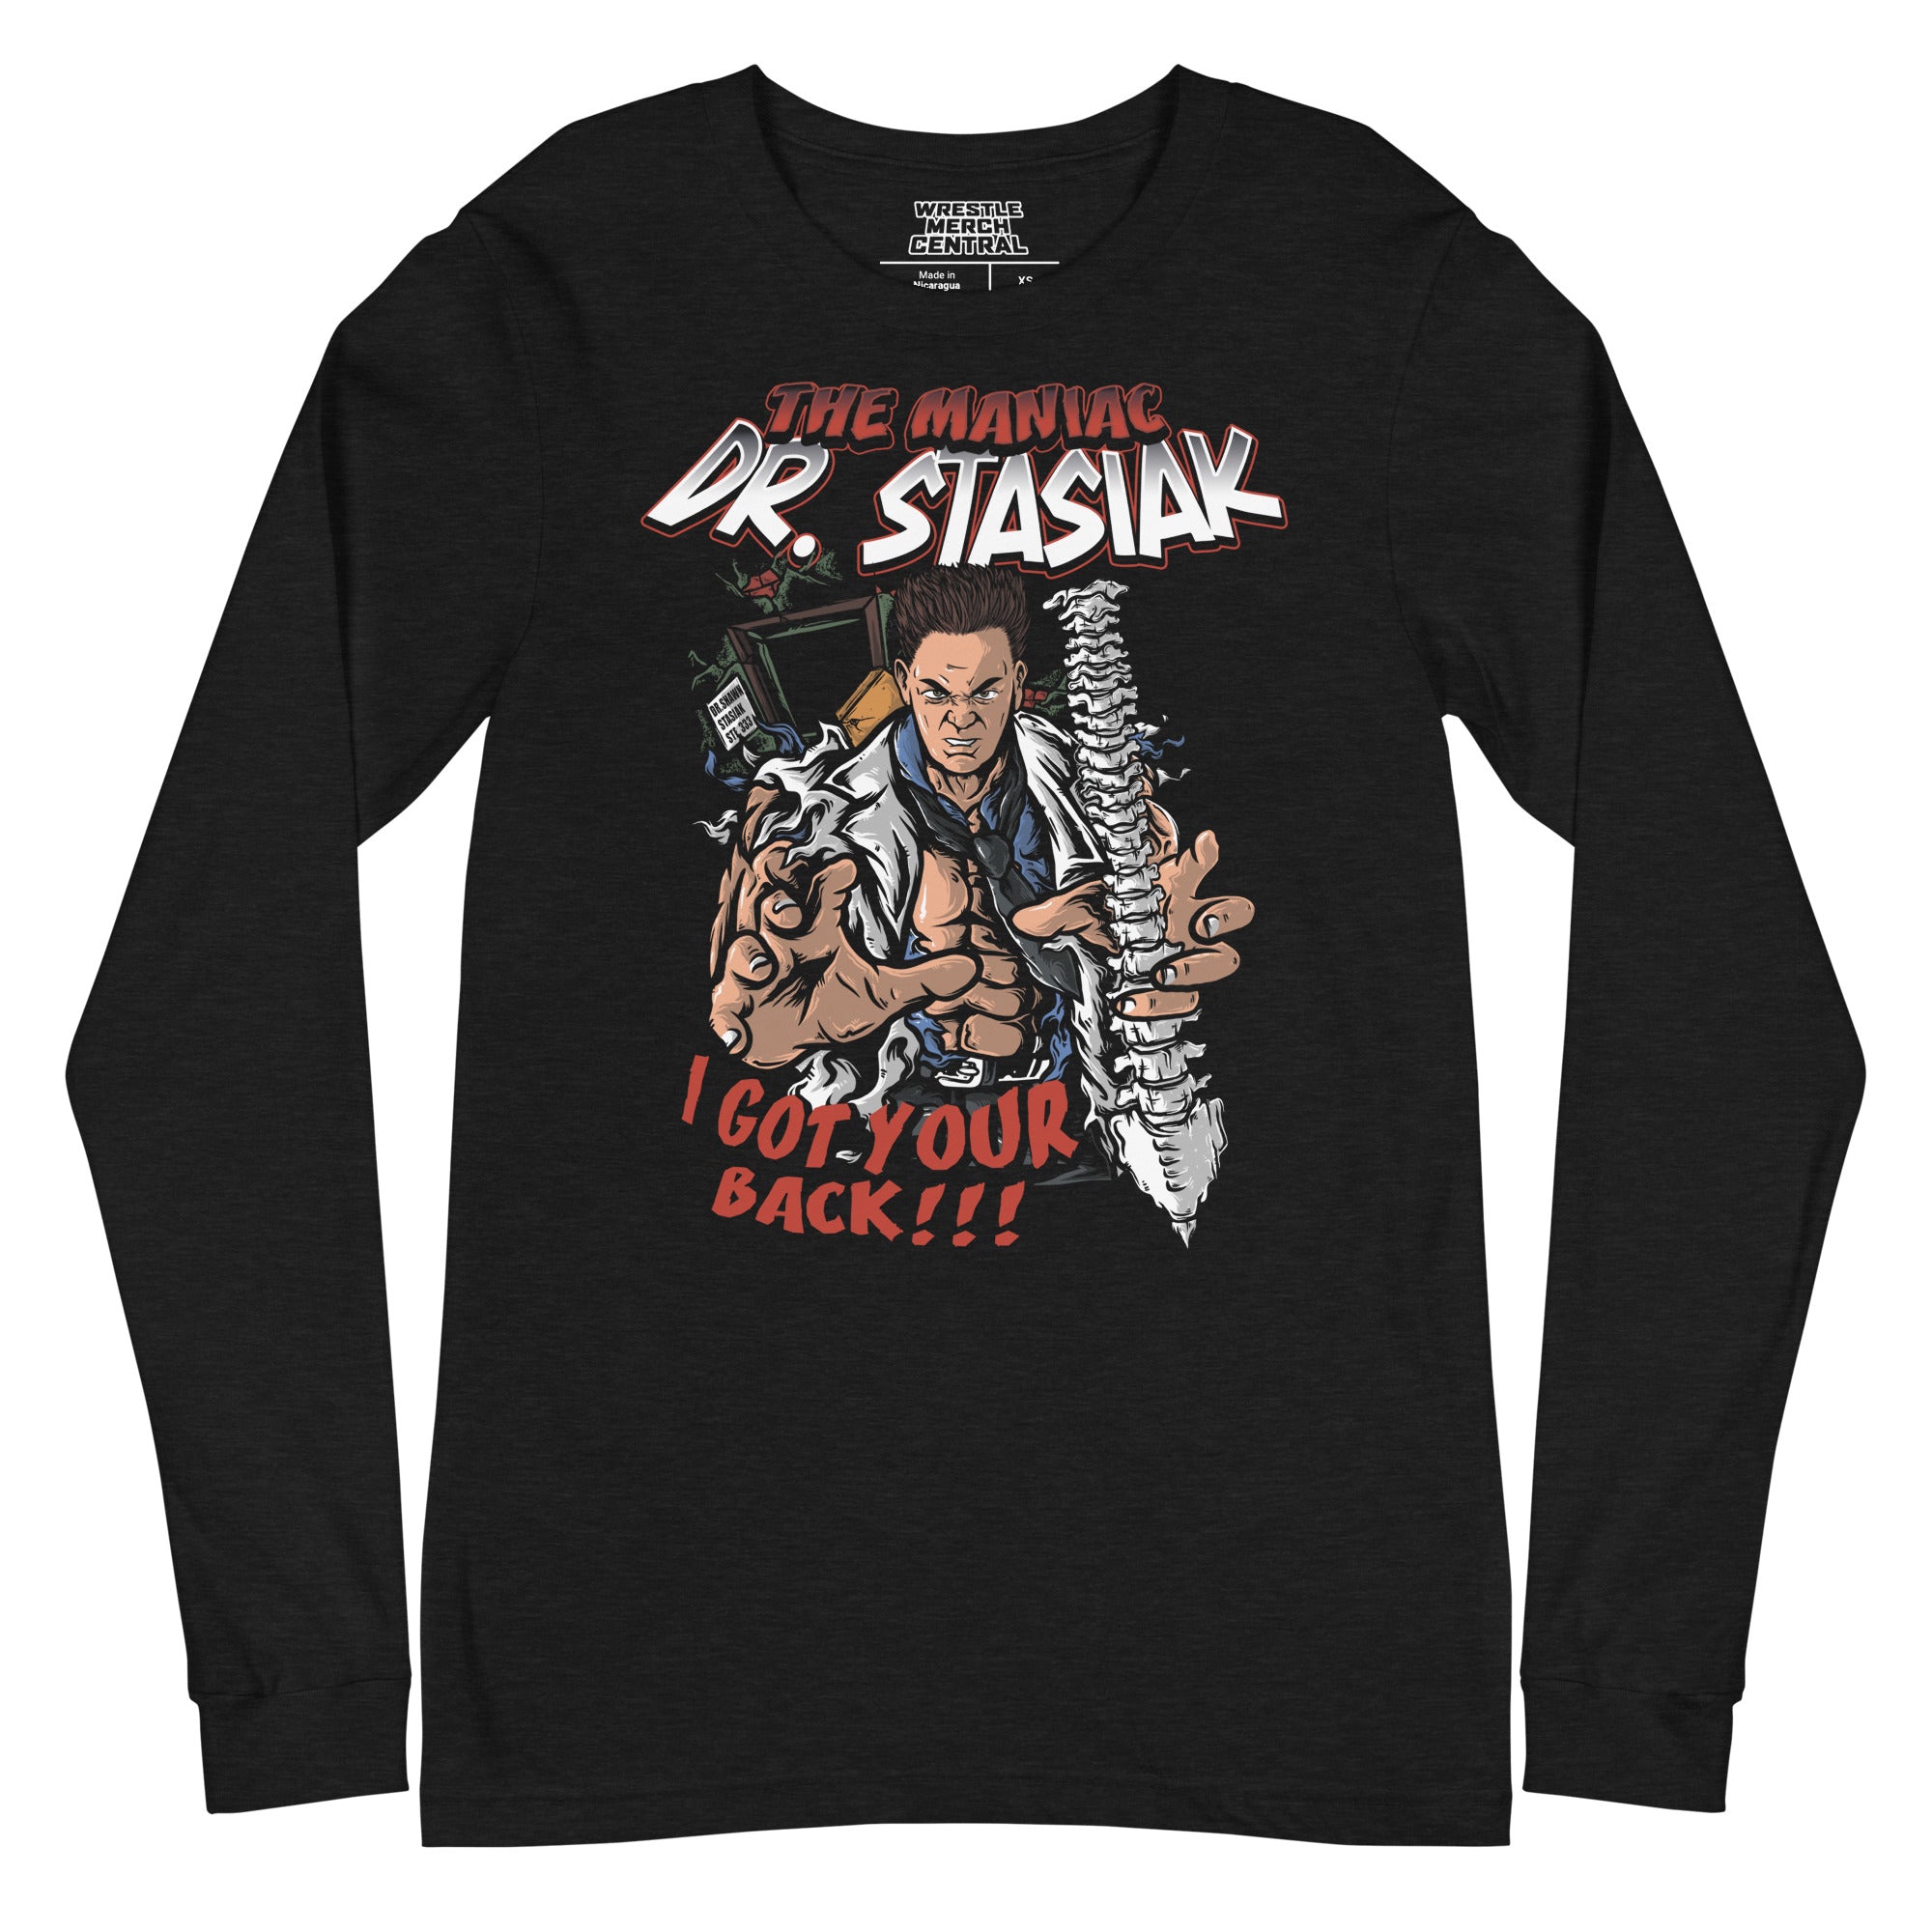 Shawn Stasiak "The Maniac" Dr Stasiak Unisex Long Sleeve T-Shirt